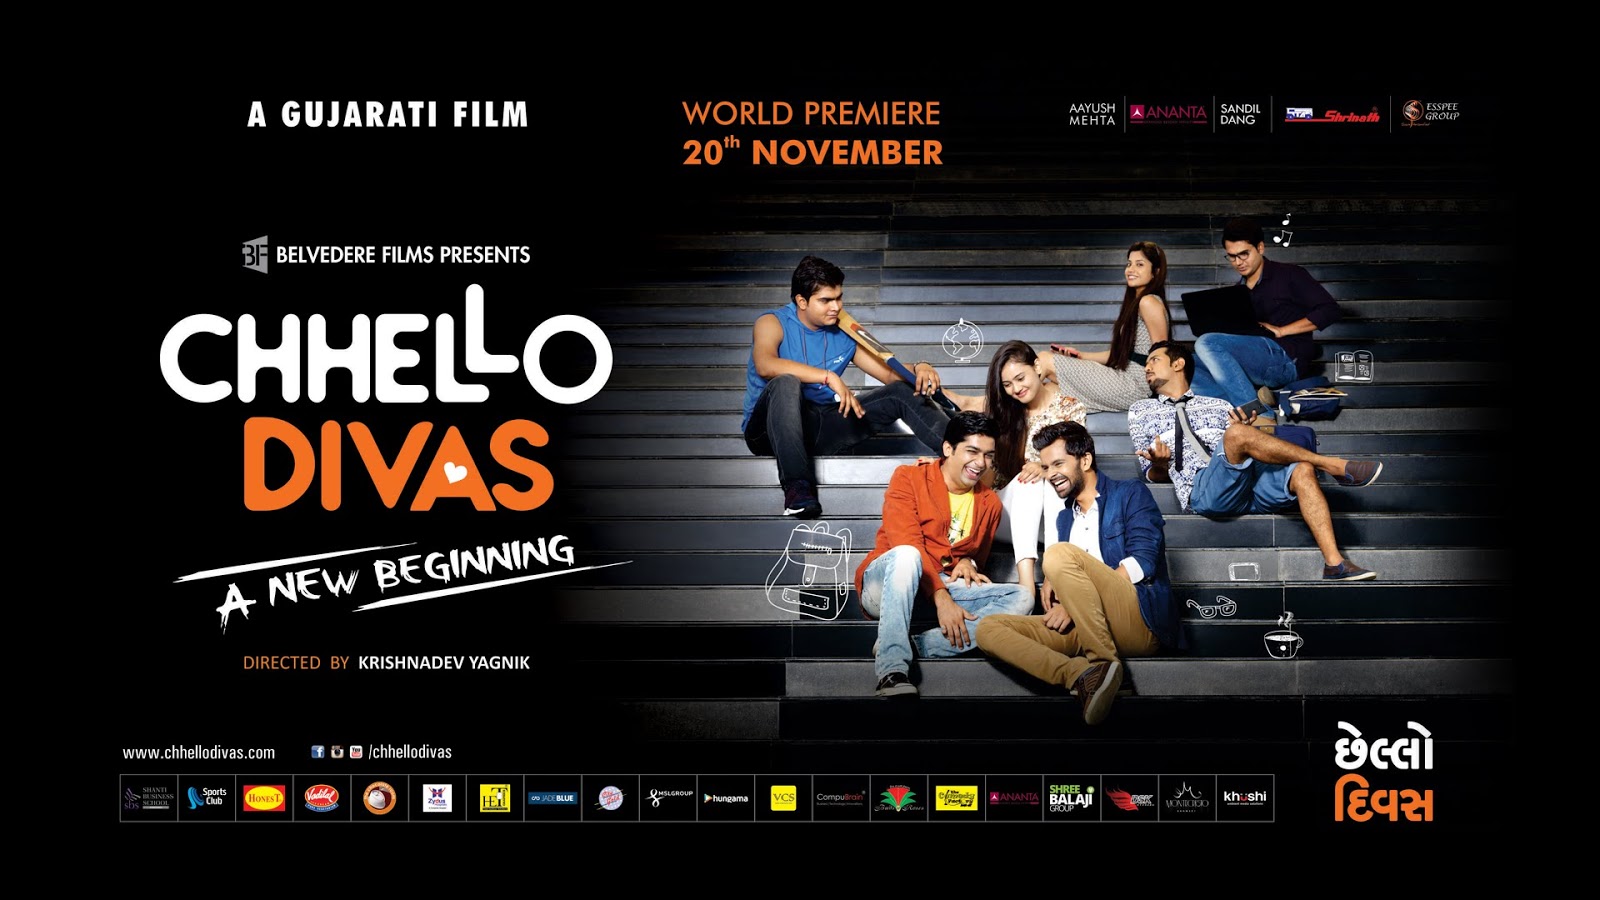 Mumbai Pune Mumbai 2 Full Movie Download 300mb